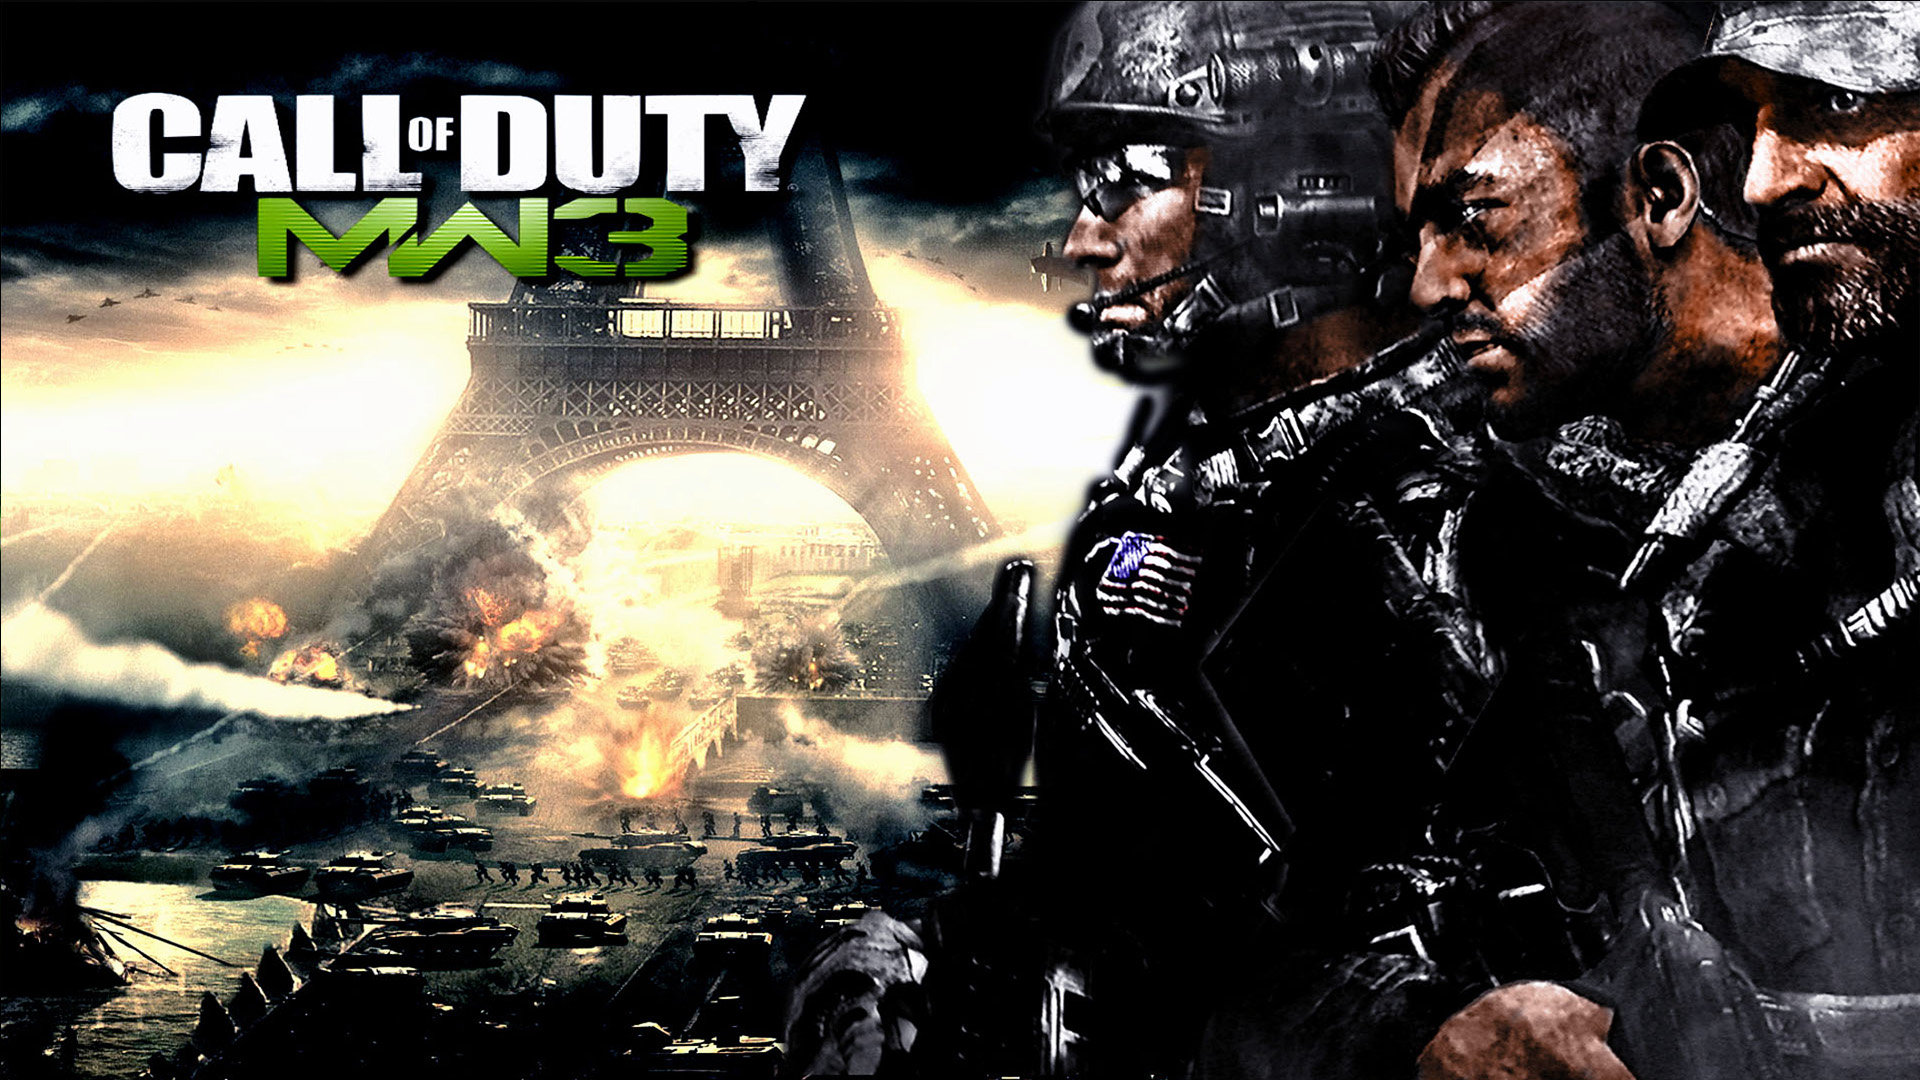 Awesome Call Of Duty - Call Of Duty Modern Warfare 3 - HD Wallpaper 